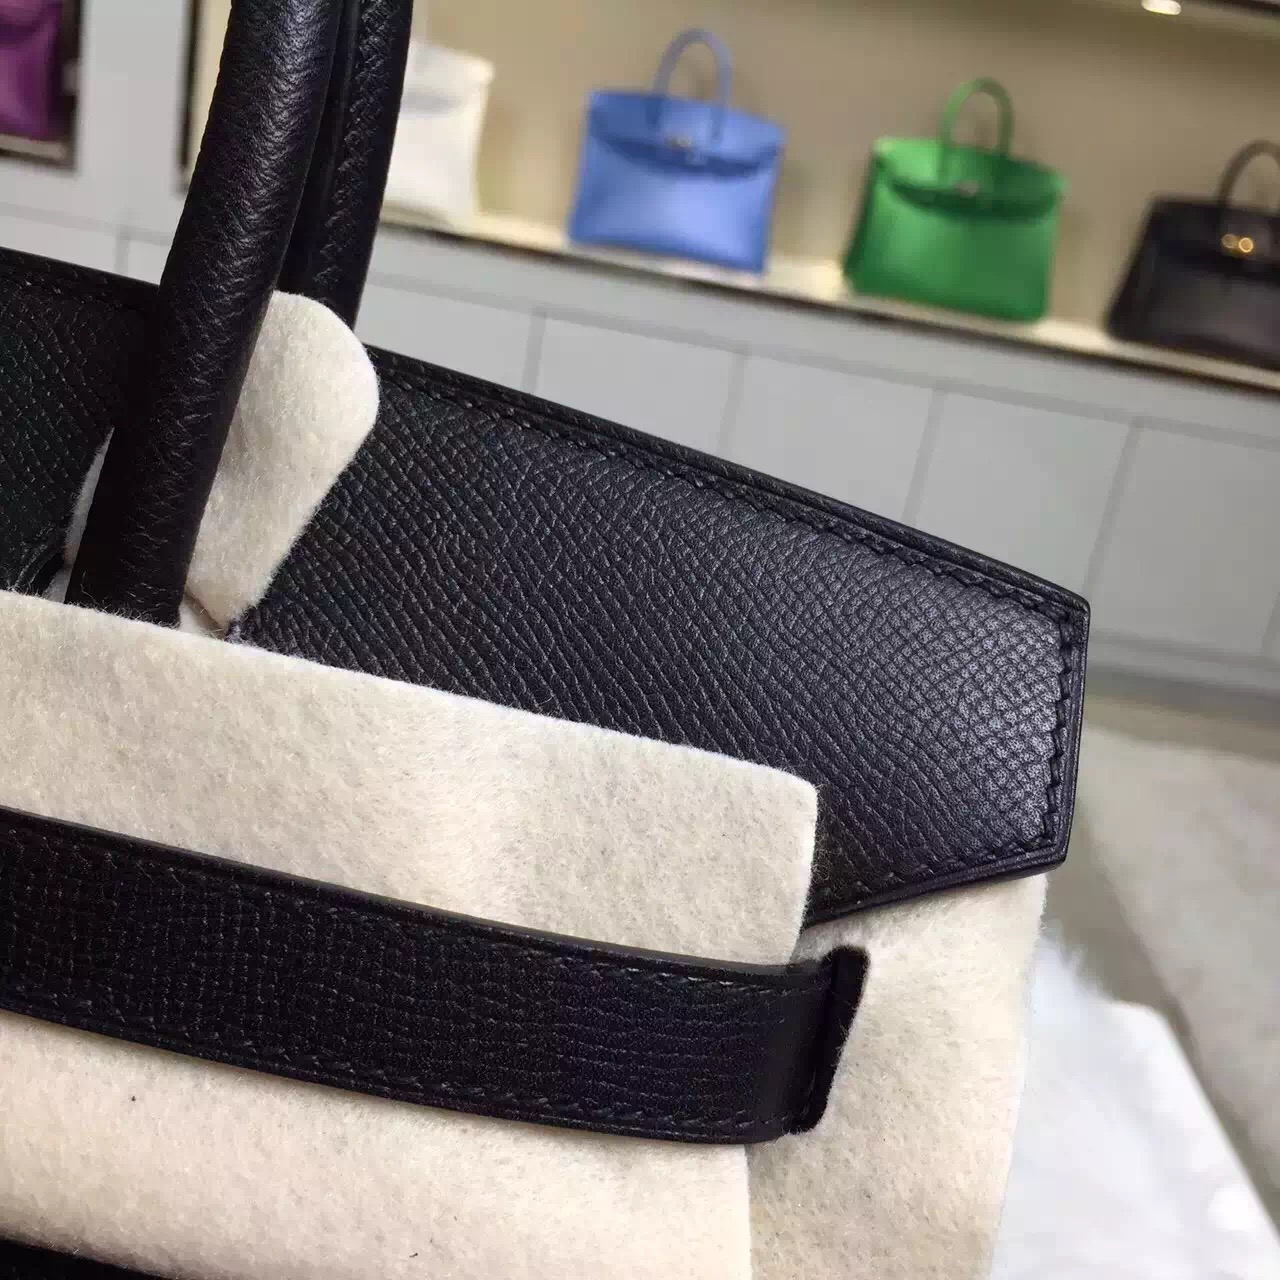 Discount Hermes Black Epsom Leather Birkin Bag 30cm Elegant Women&#8217;s Tote Bag